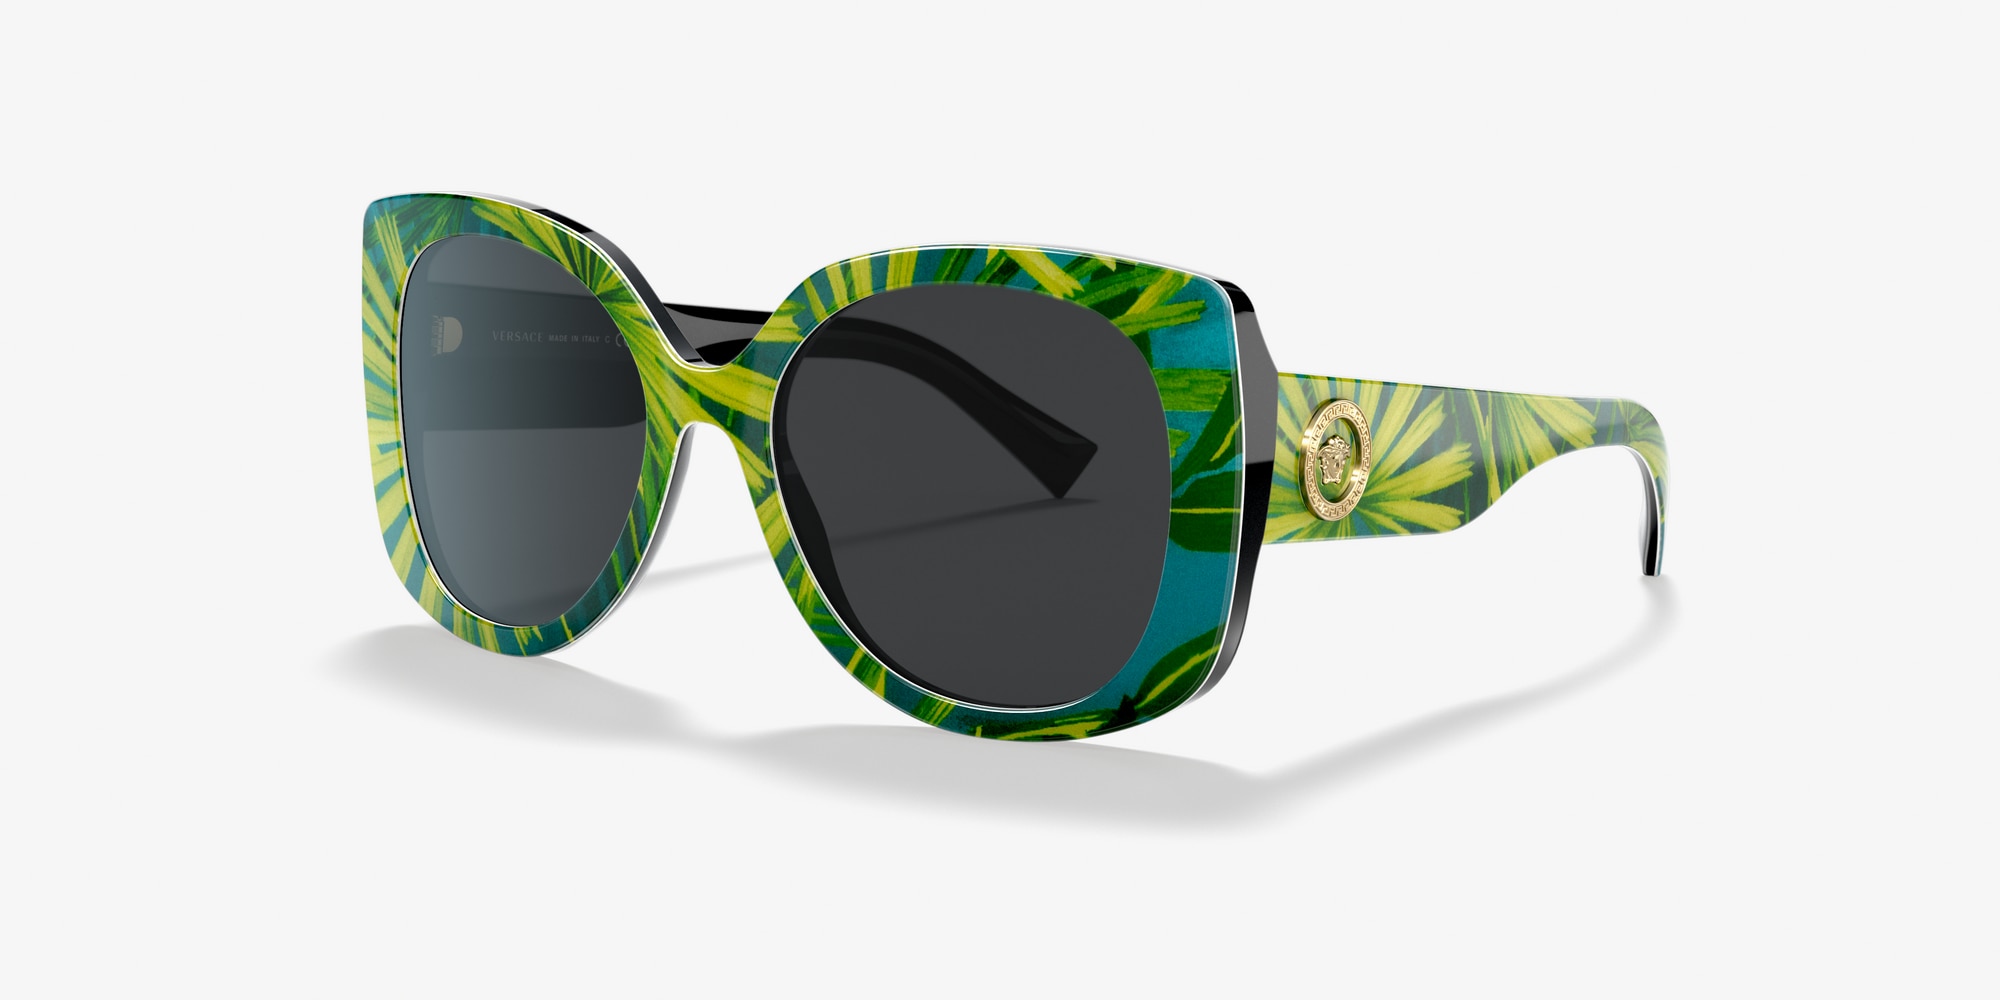 versace green sunglasses